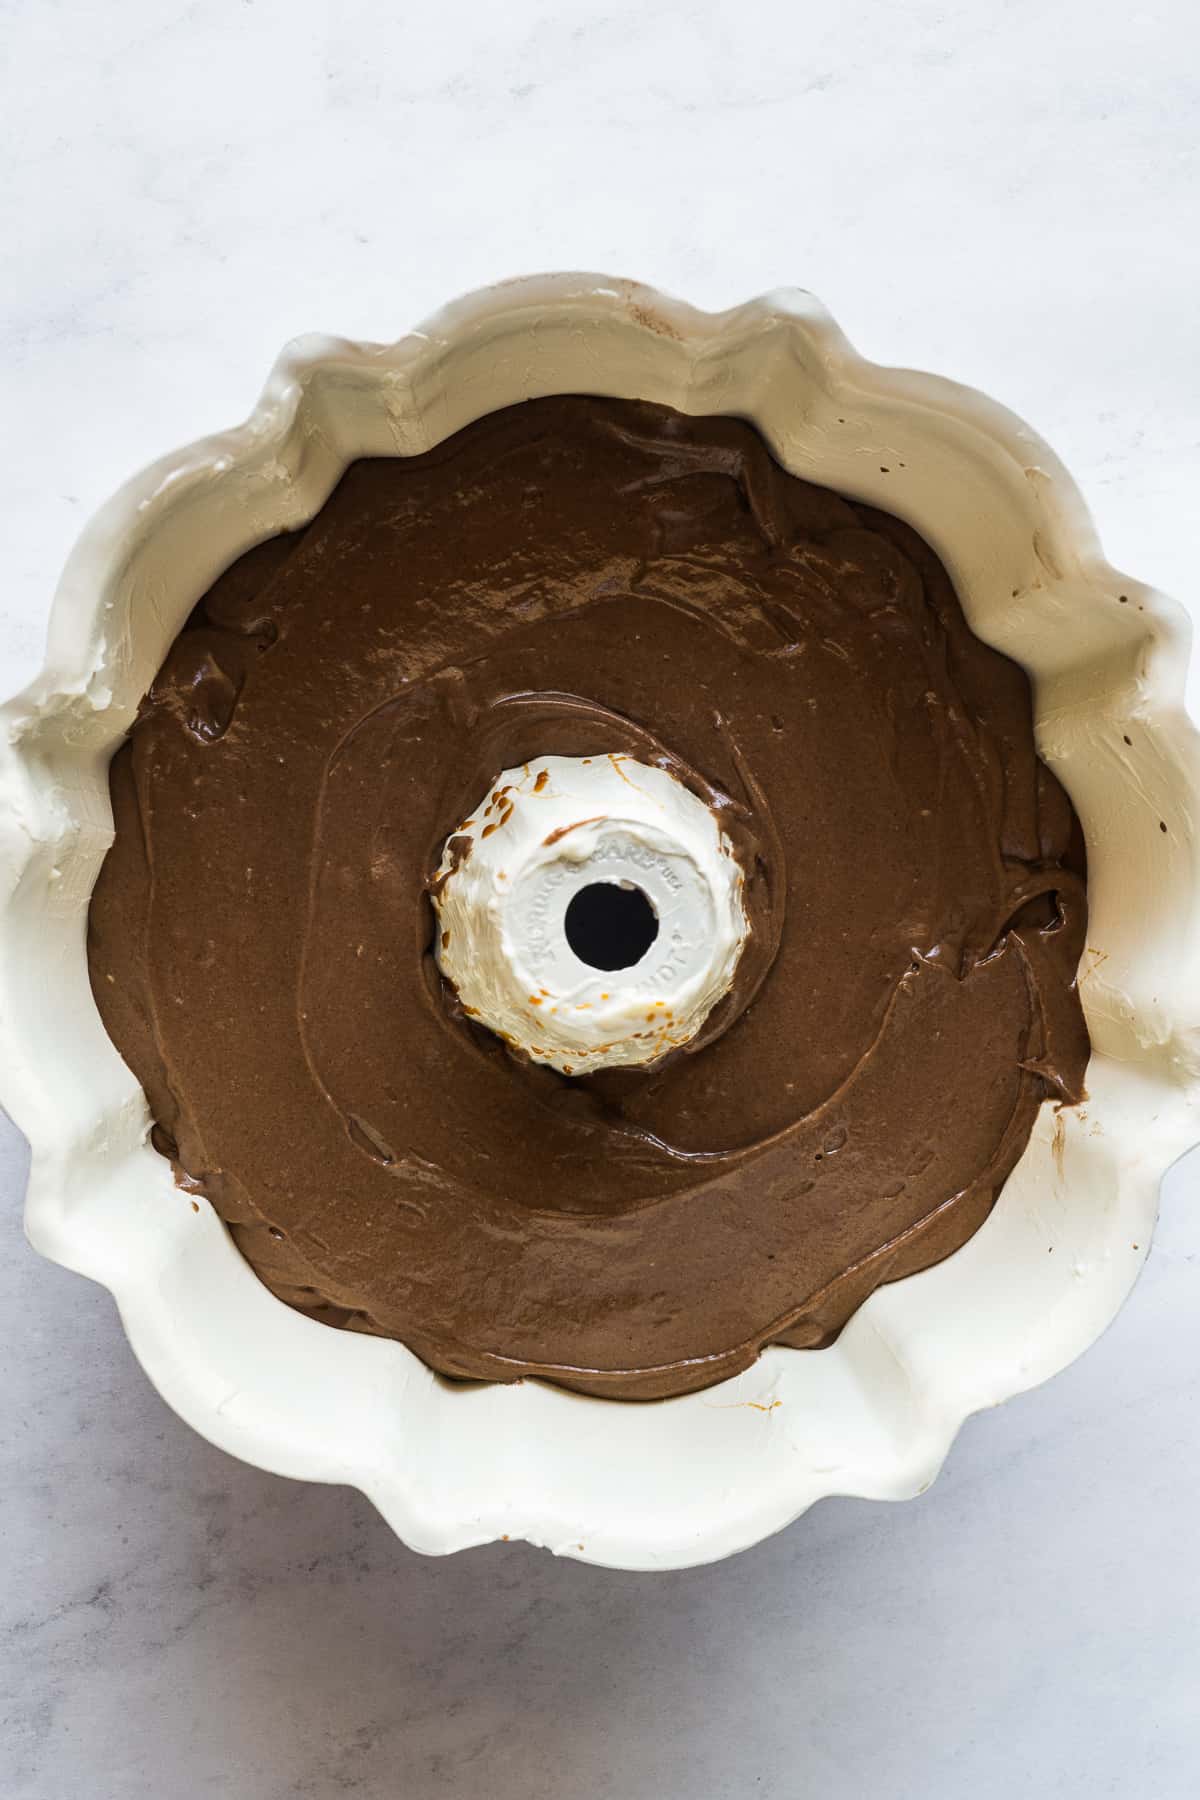 Chocolate cake batter in a bundt pan.